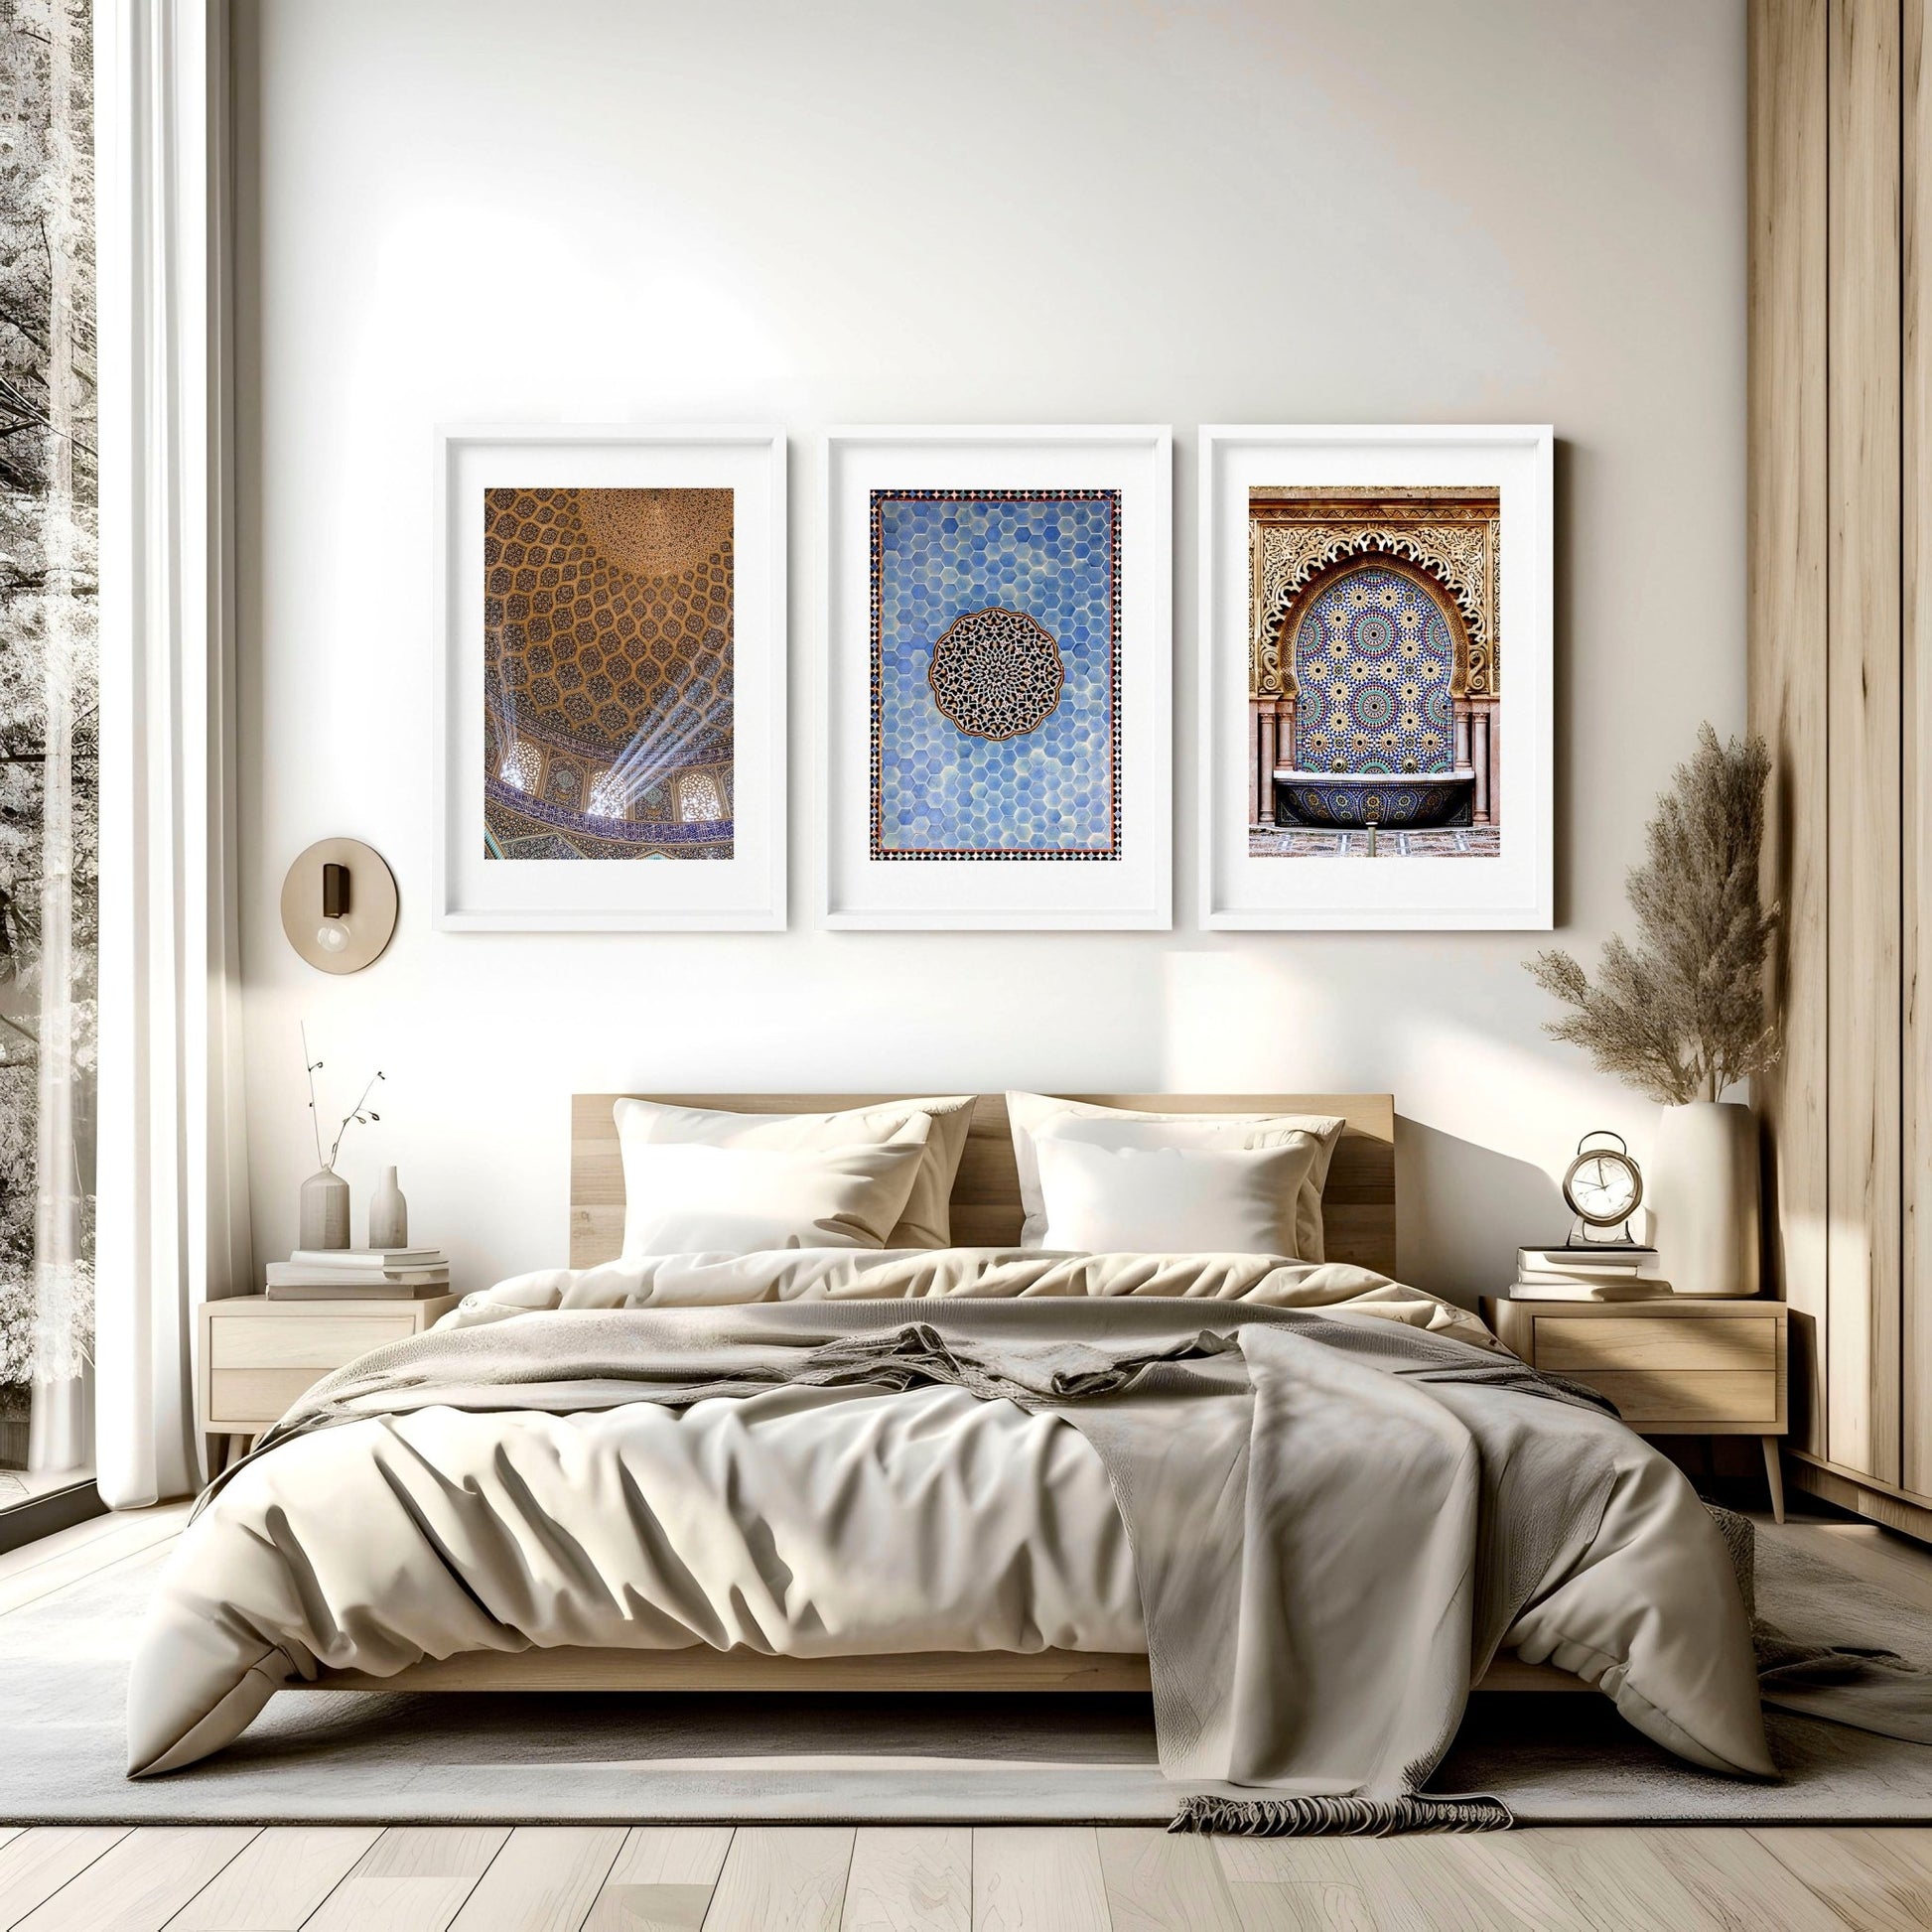 Islamic Art geometry | set of 3 Bedroom wall art